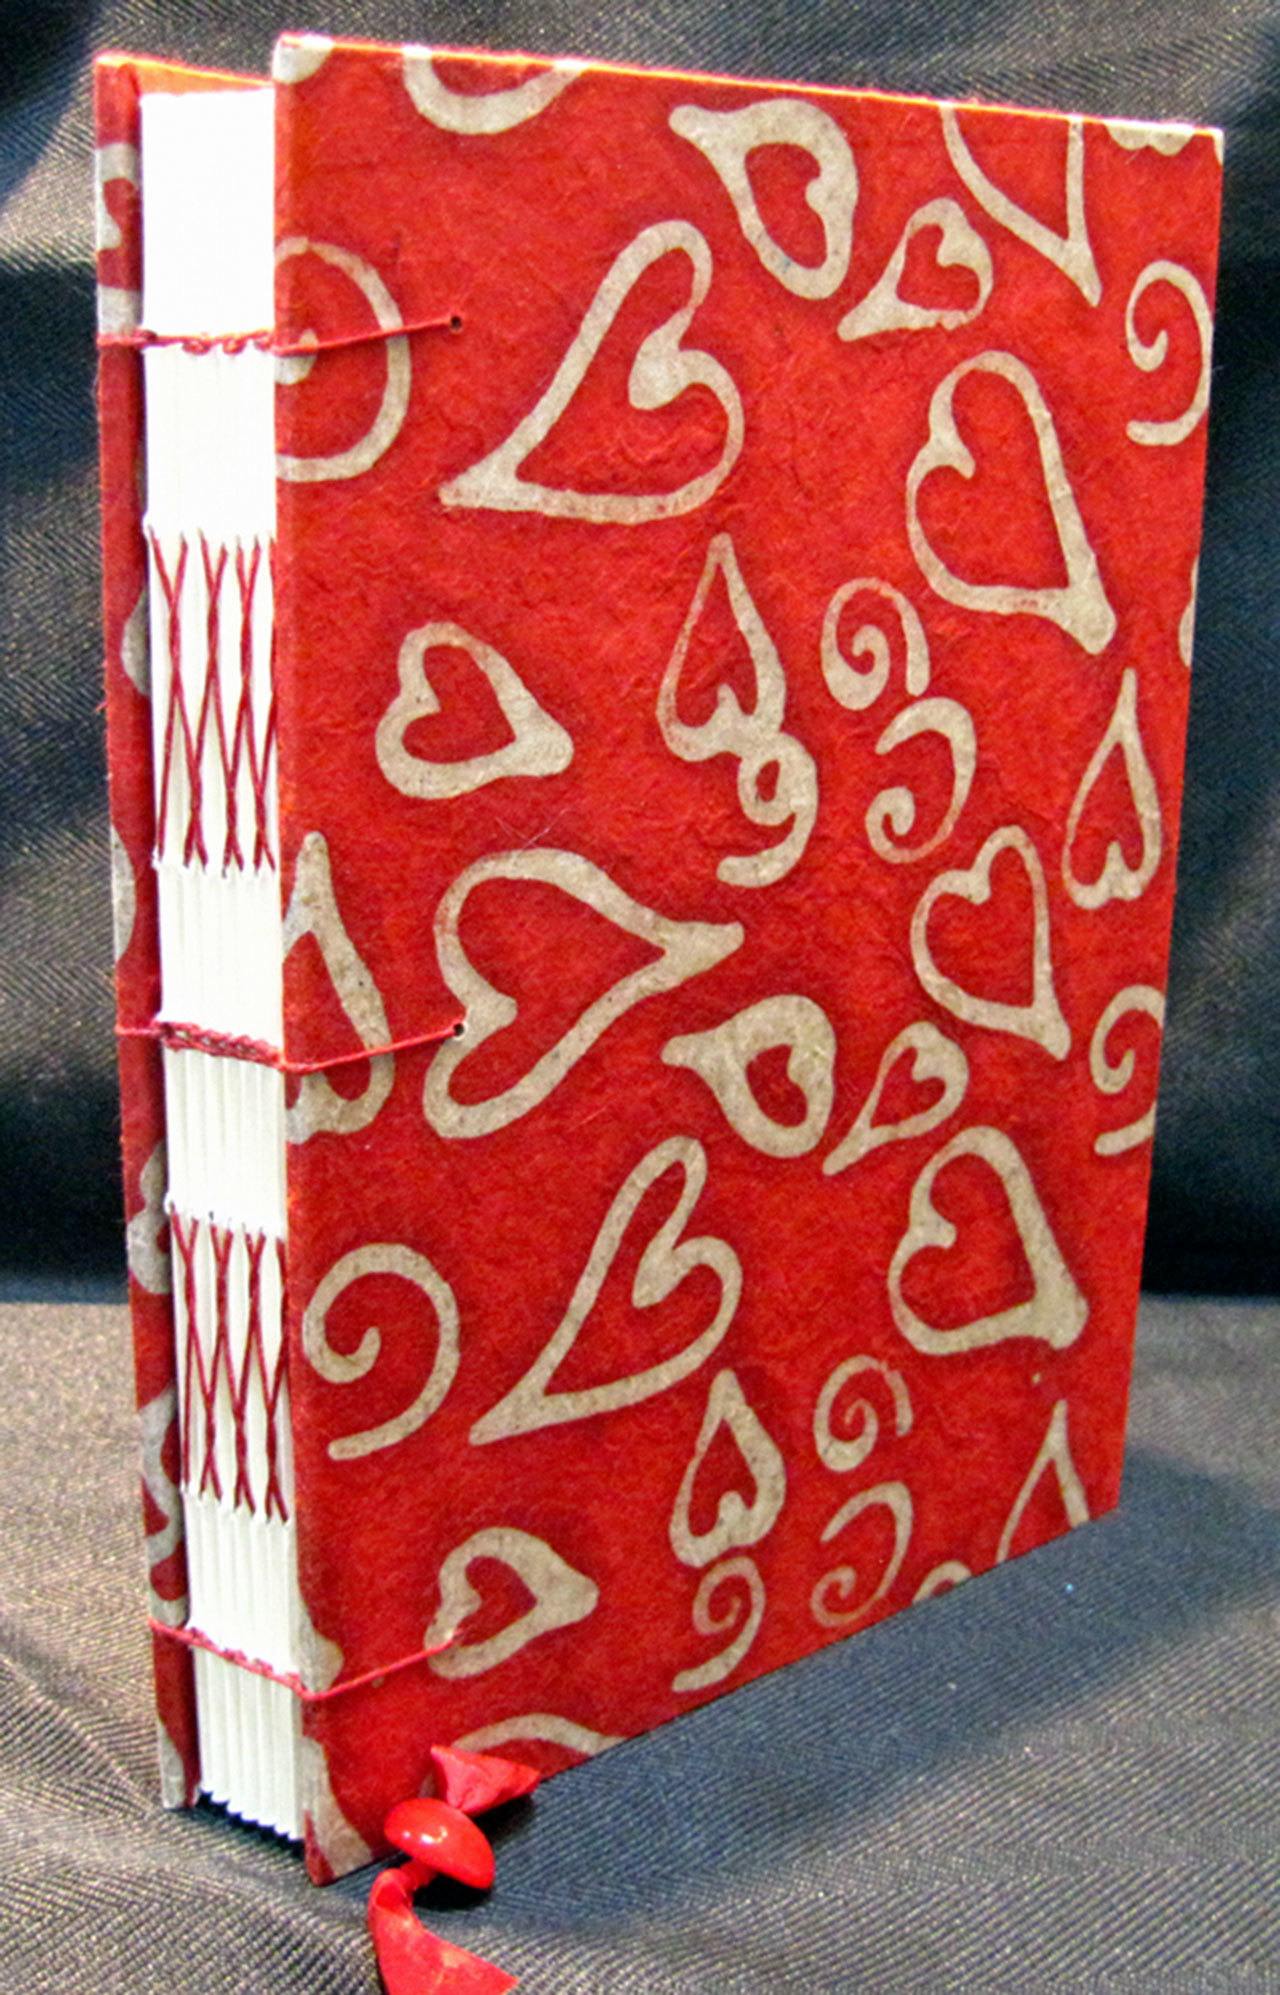 Handmade red hearts journal by Jean Wyatt.